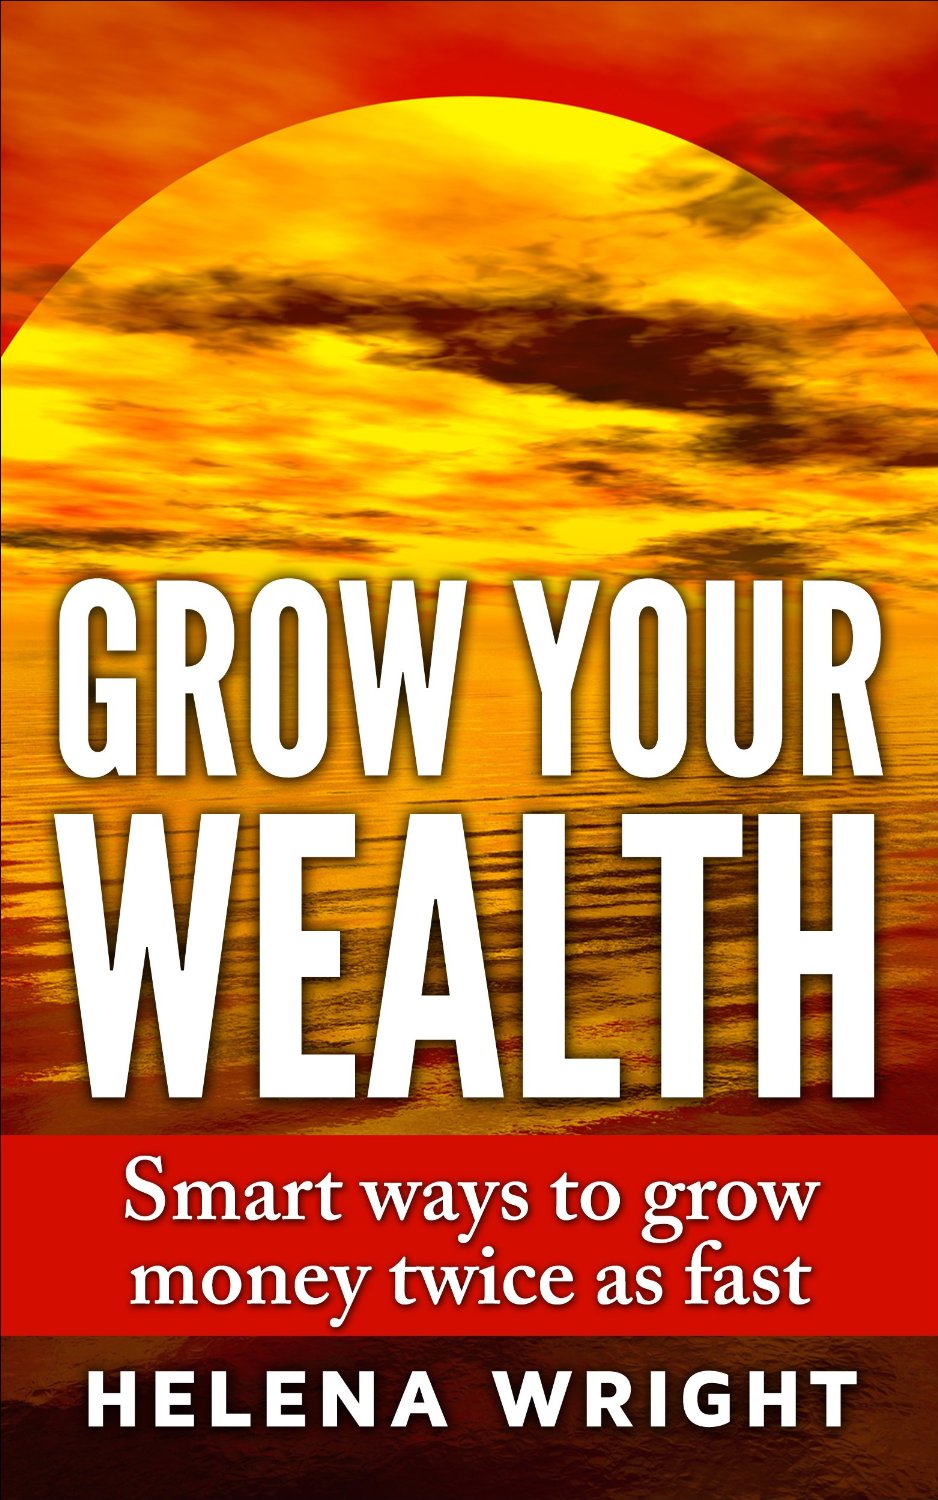 Grow Your Wealth: Smart ways to grow money twice as fast by Helena Wright